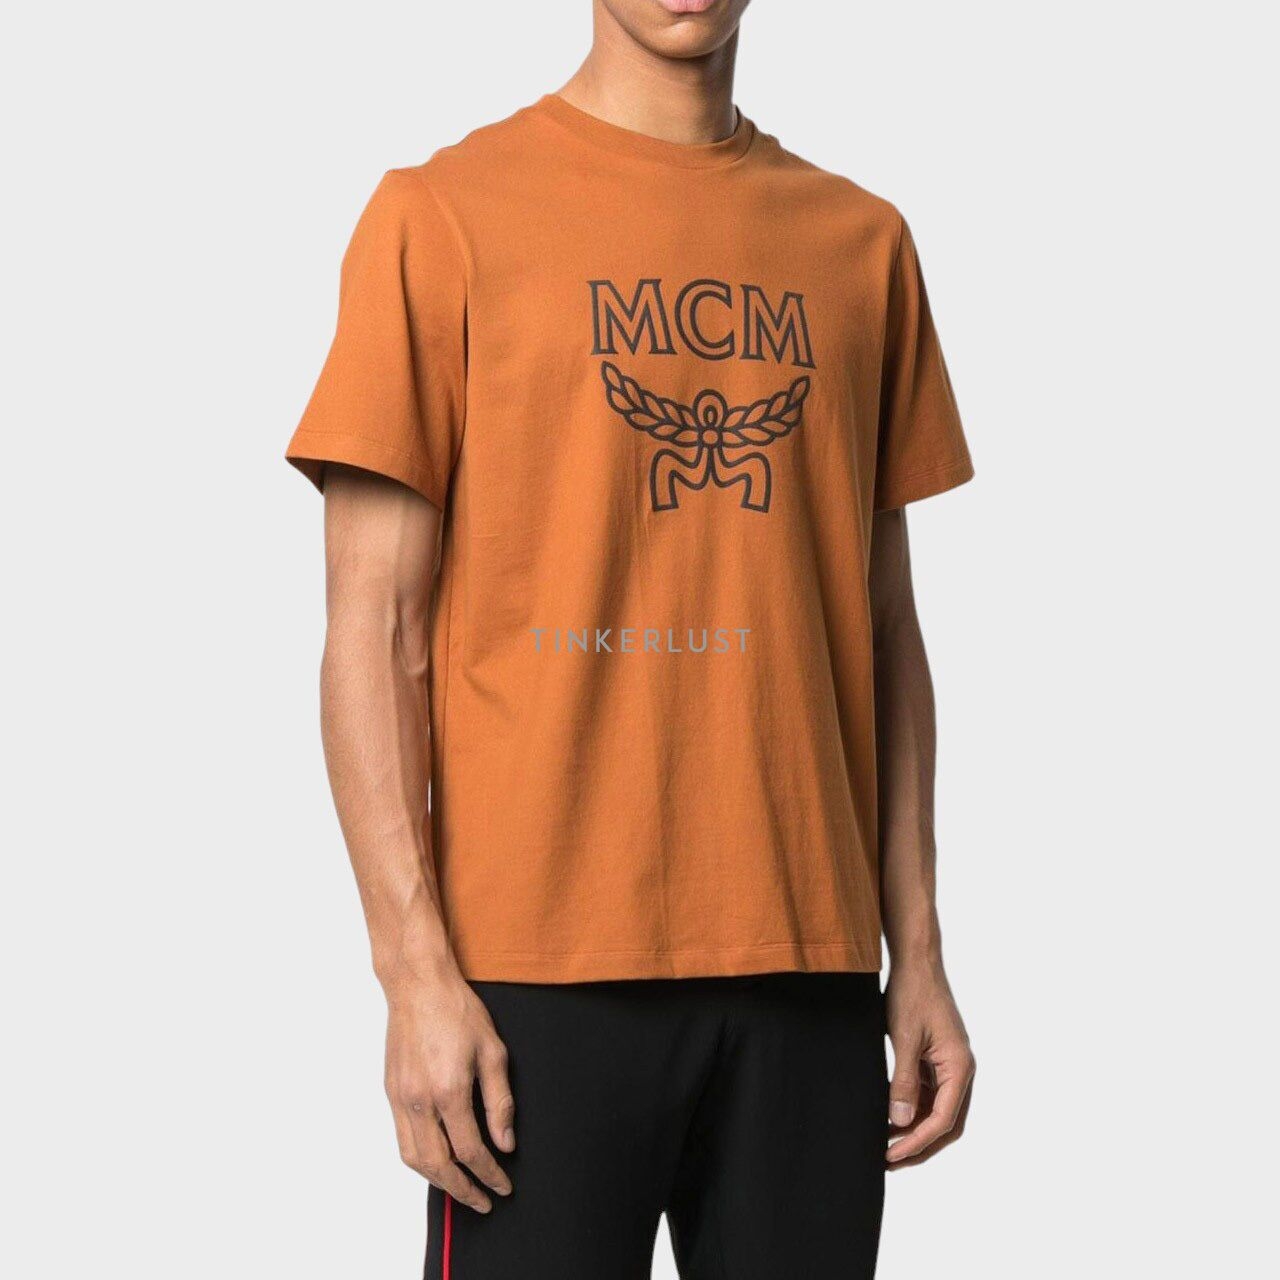 MCM Men Crew Neck T-Shirt in Pecan Cotton